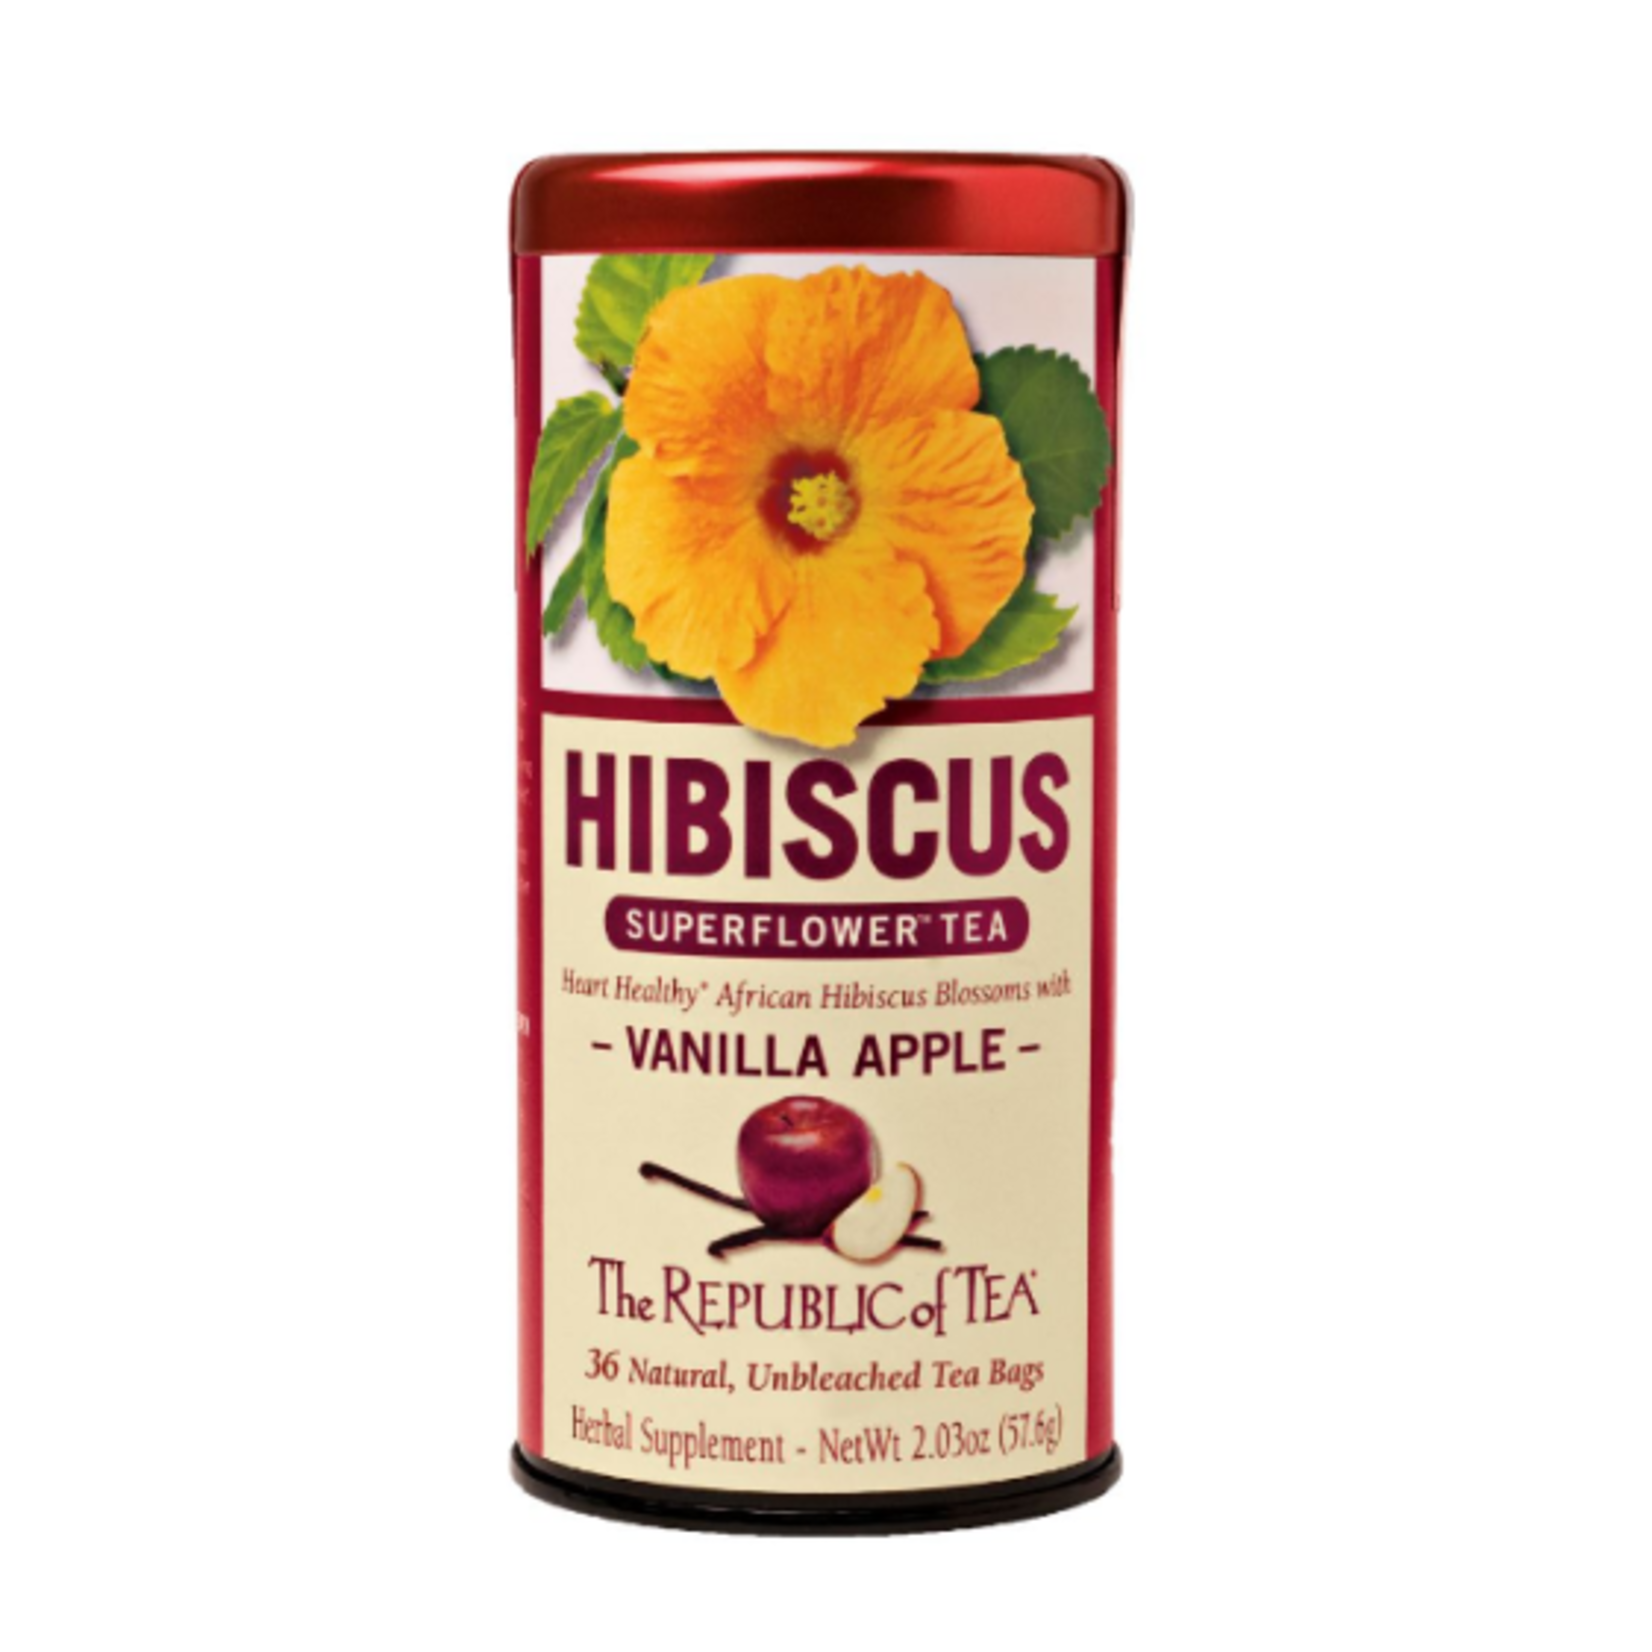 The Republic of Tea Vanilla Apple Hibiscus Tea, 36 Bag Tin